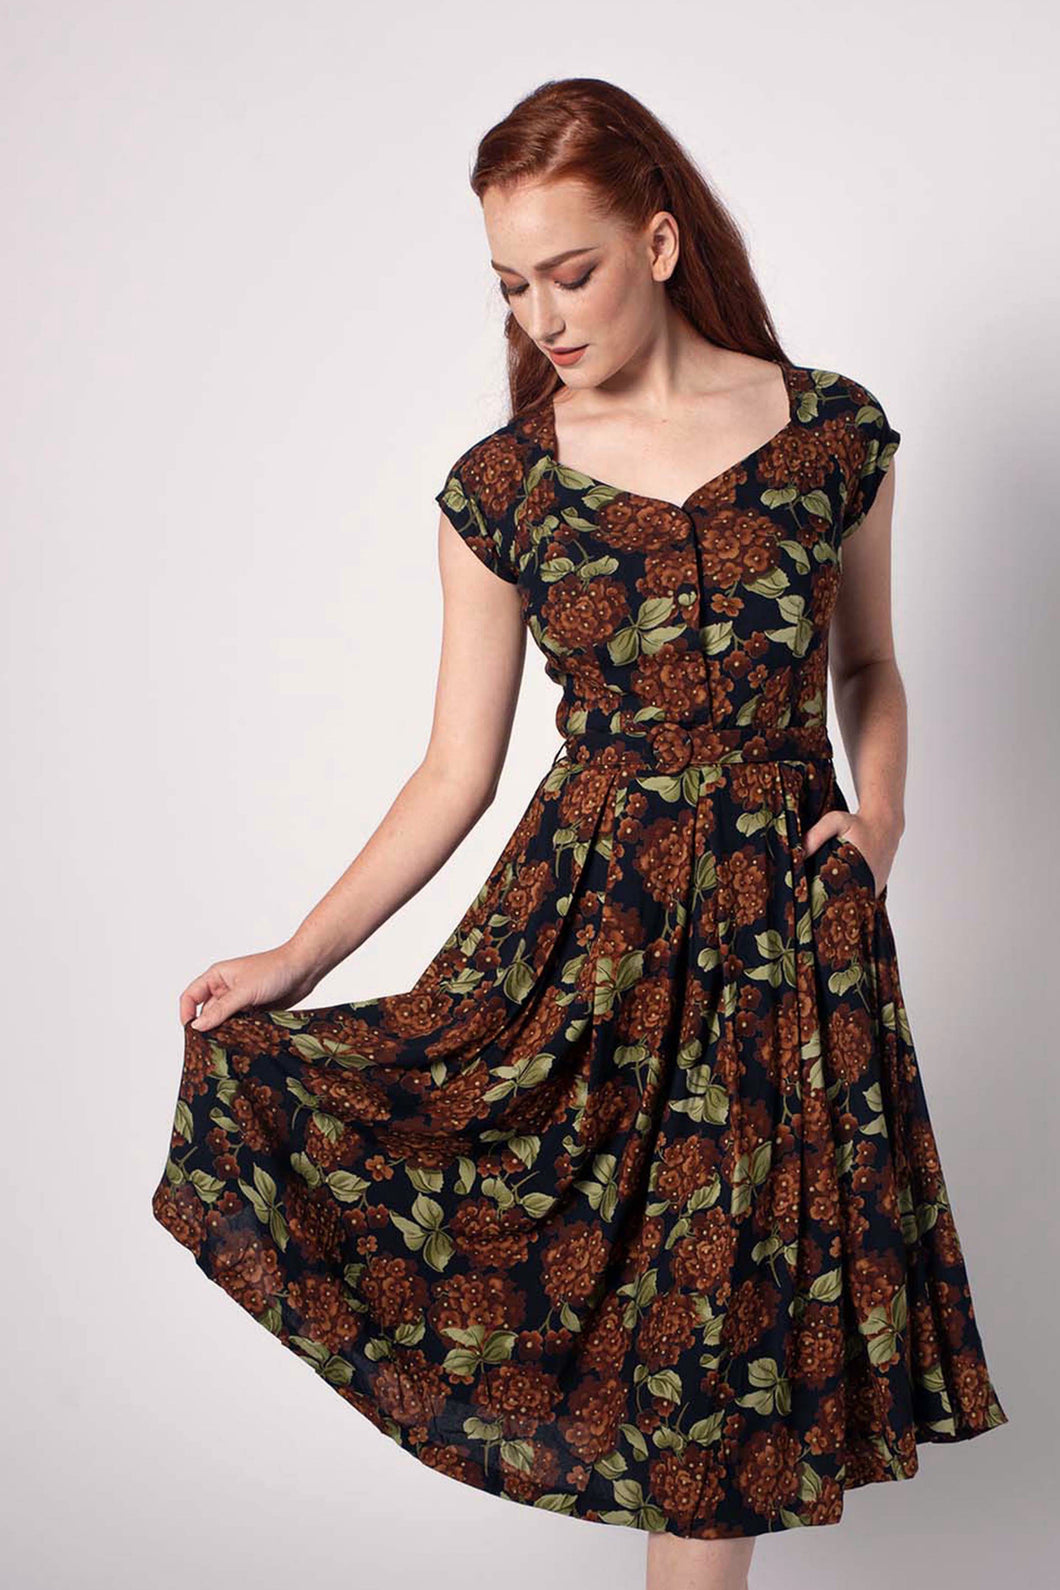 Tuscan Brown & Green Floral Dress